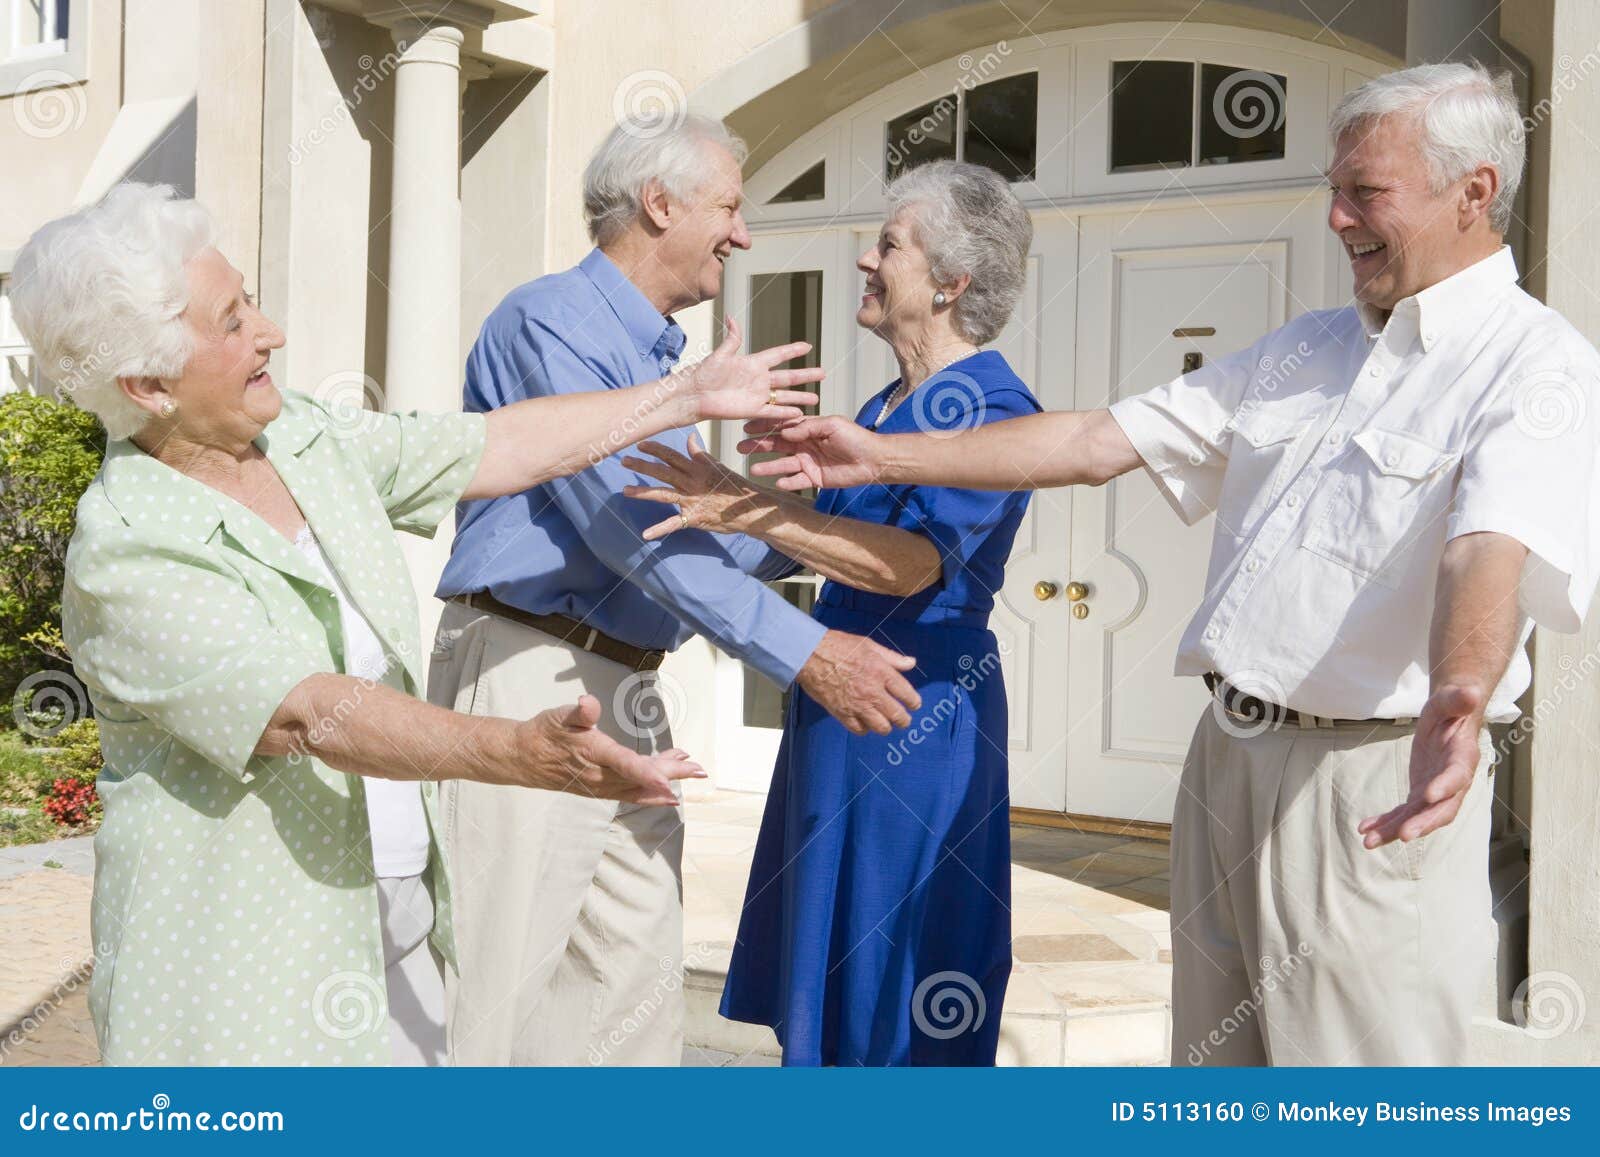 senior couple greeting friends